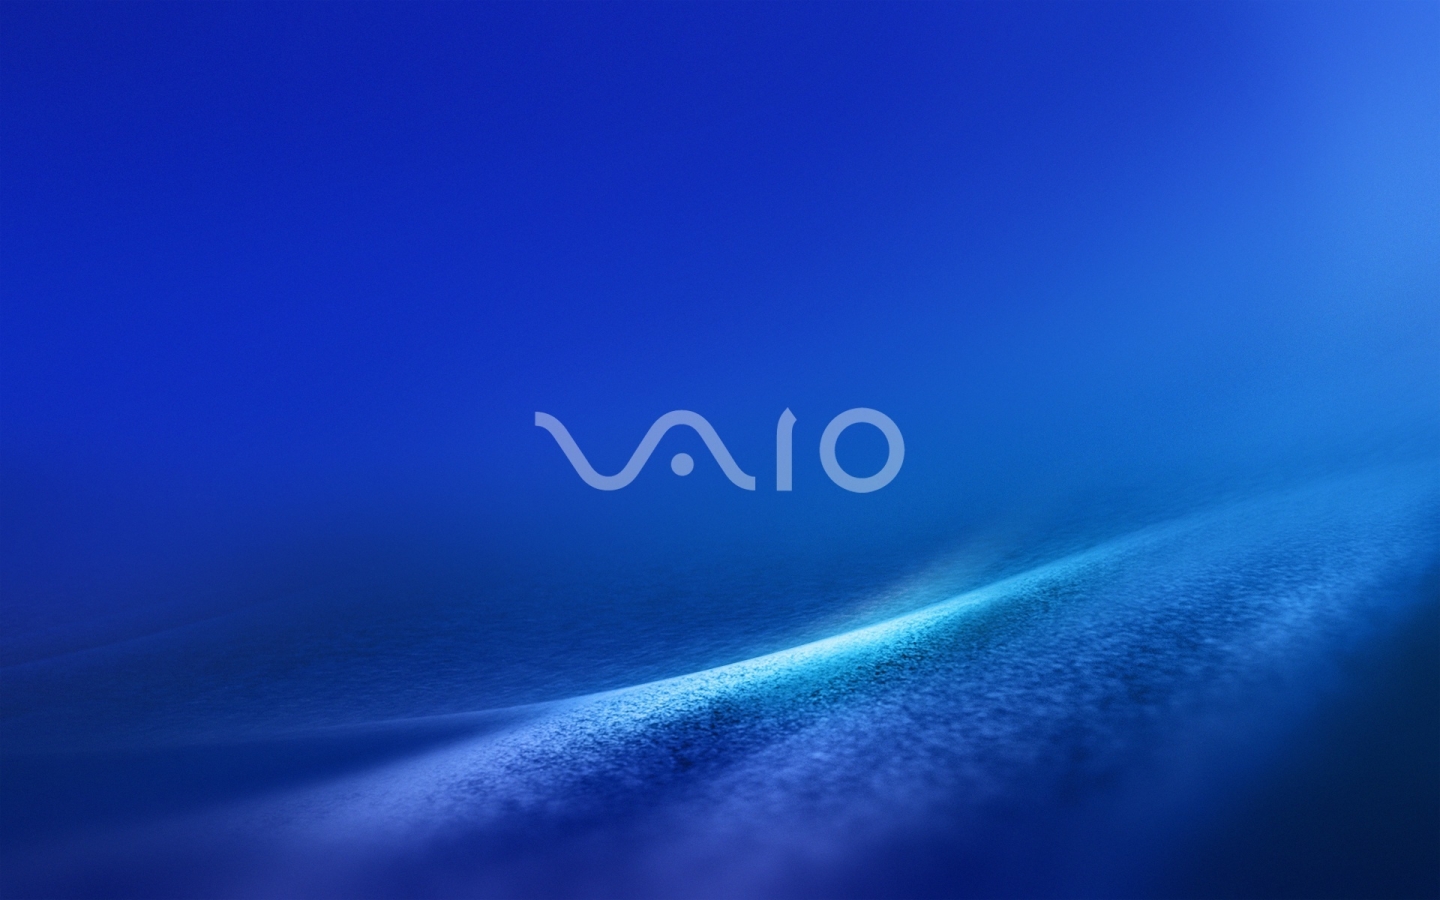 Vaio Dark Blue for 1440 x 900 widescreen resolution